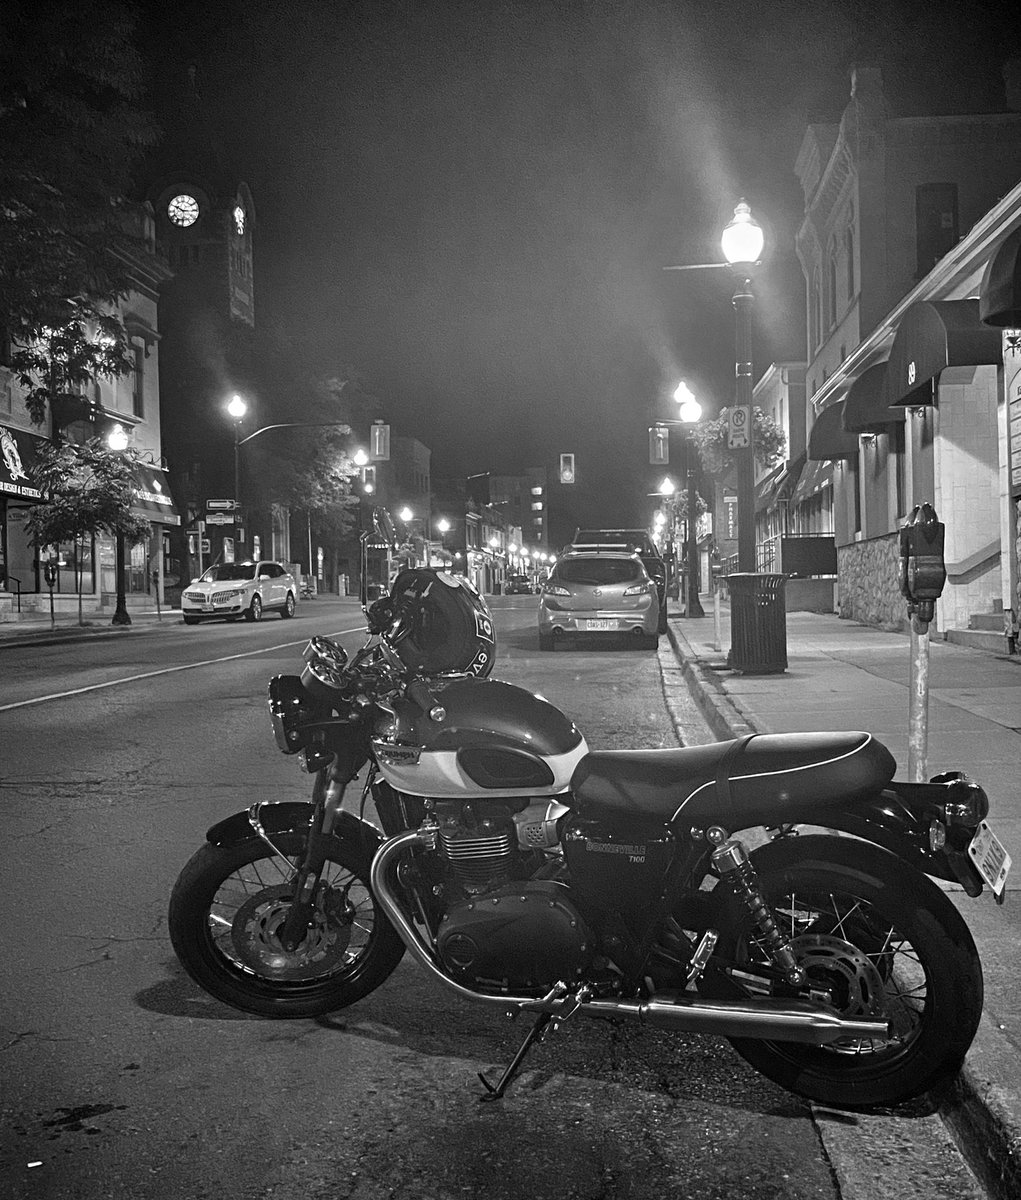 Night rip😮 #bliss #riding #freedom #motorcycles #nightriding  #triumpht100bonneville #triumph #triumpht100 #blackandwhite #blackandwhitestreetphotography #streetphotography #monochrome #bw #city #citylights